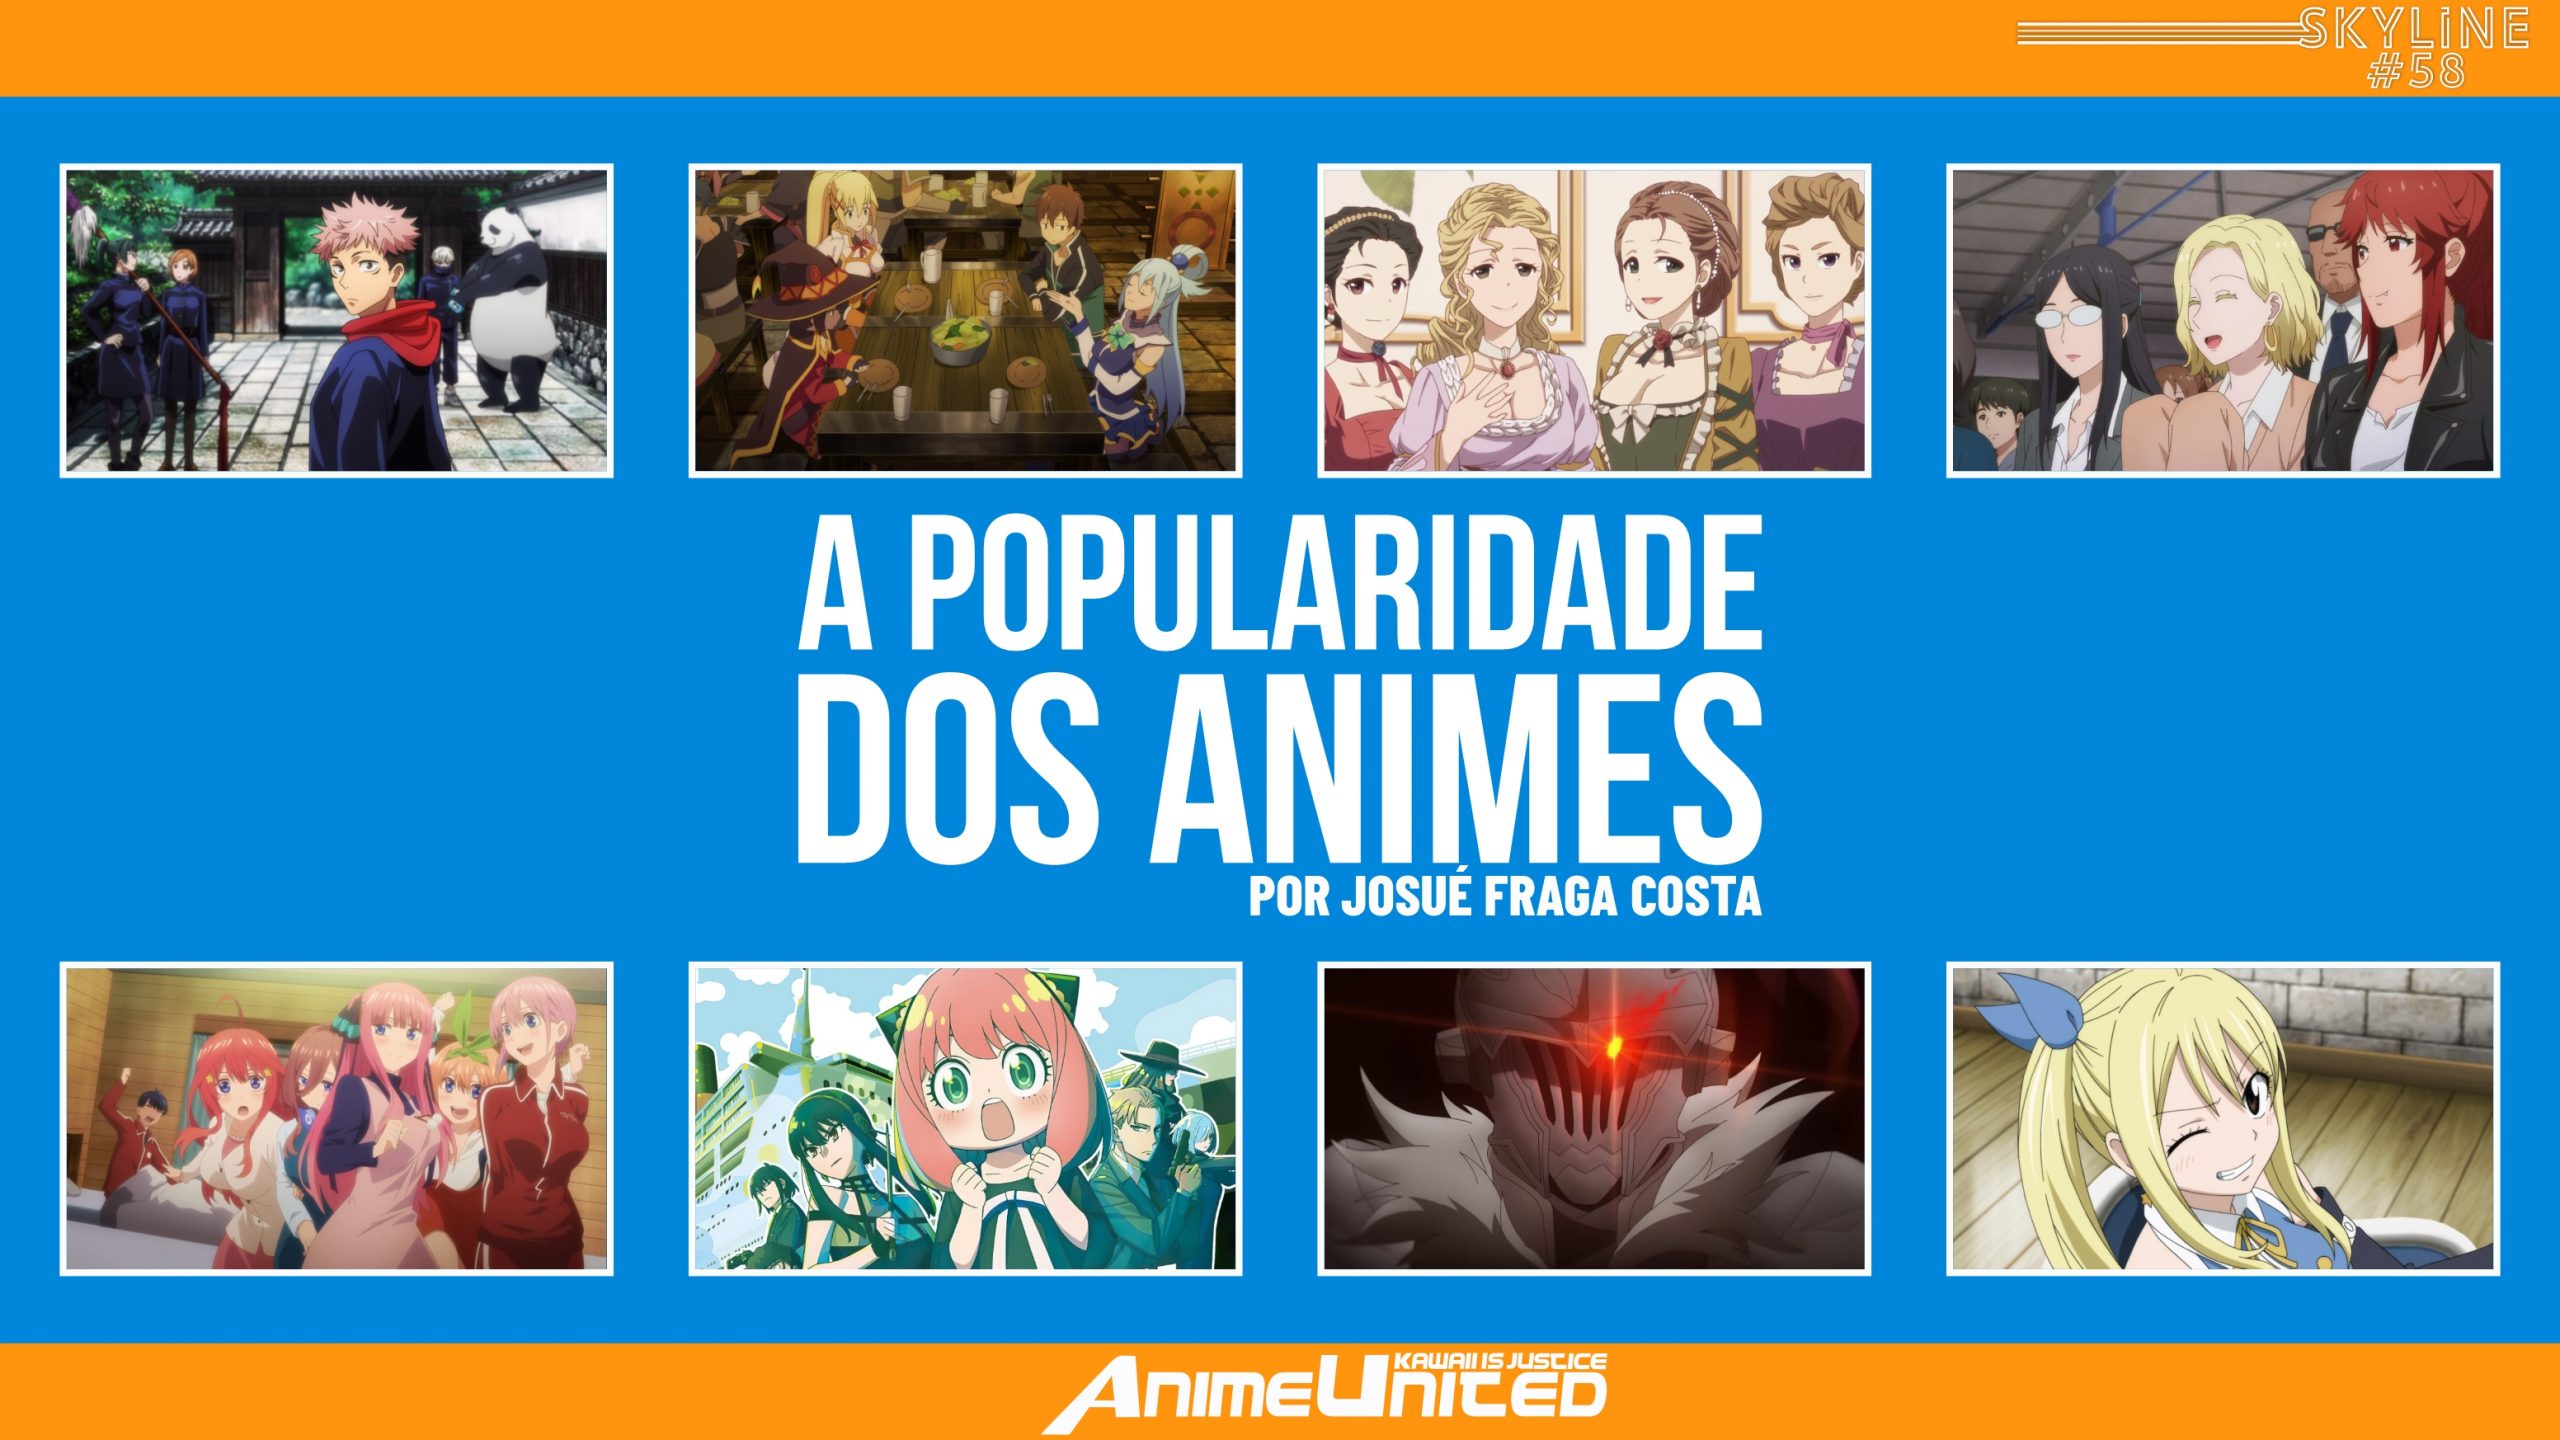 Art of Fullmetal Alchemist: Brotherhood  Anime kawaii, Personagens de  anime, Anime